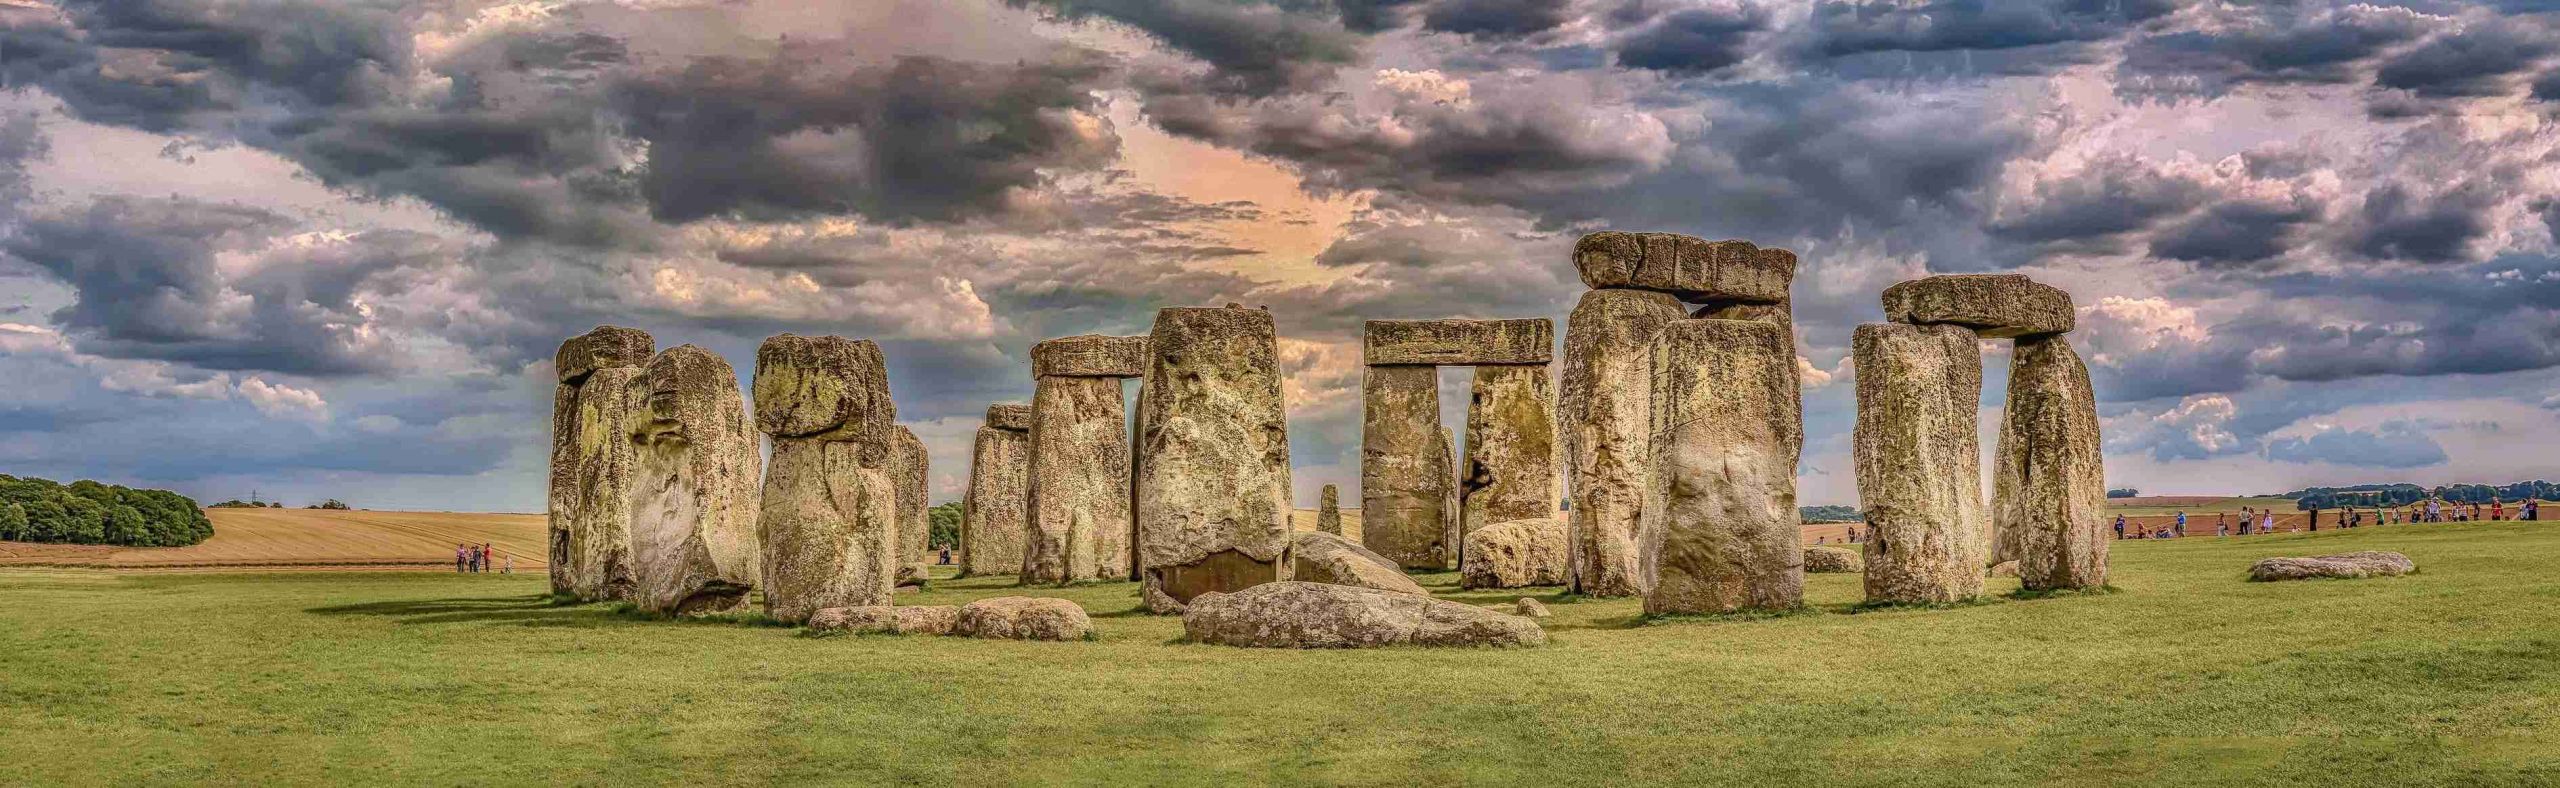 stonehenge-pexels-free-download-161798-scaled.jpg